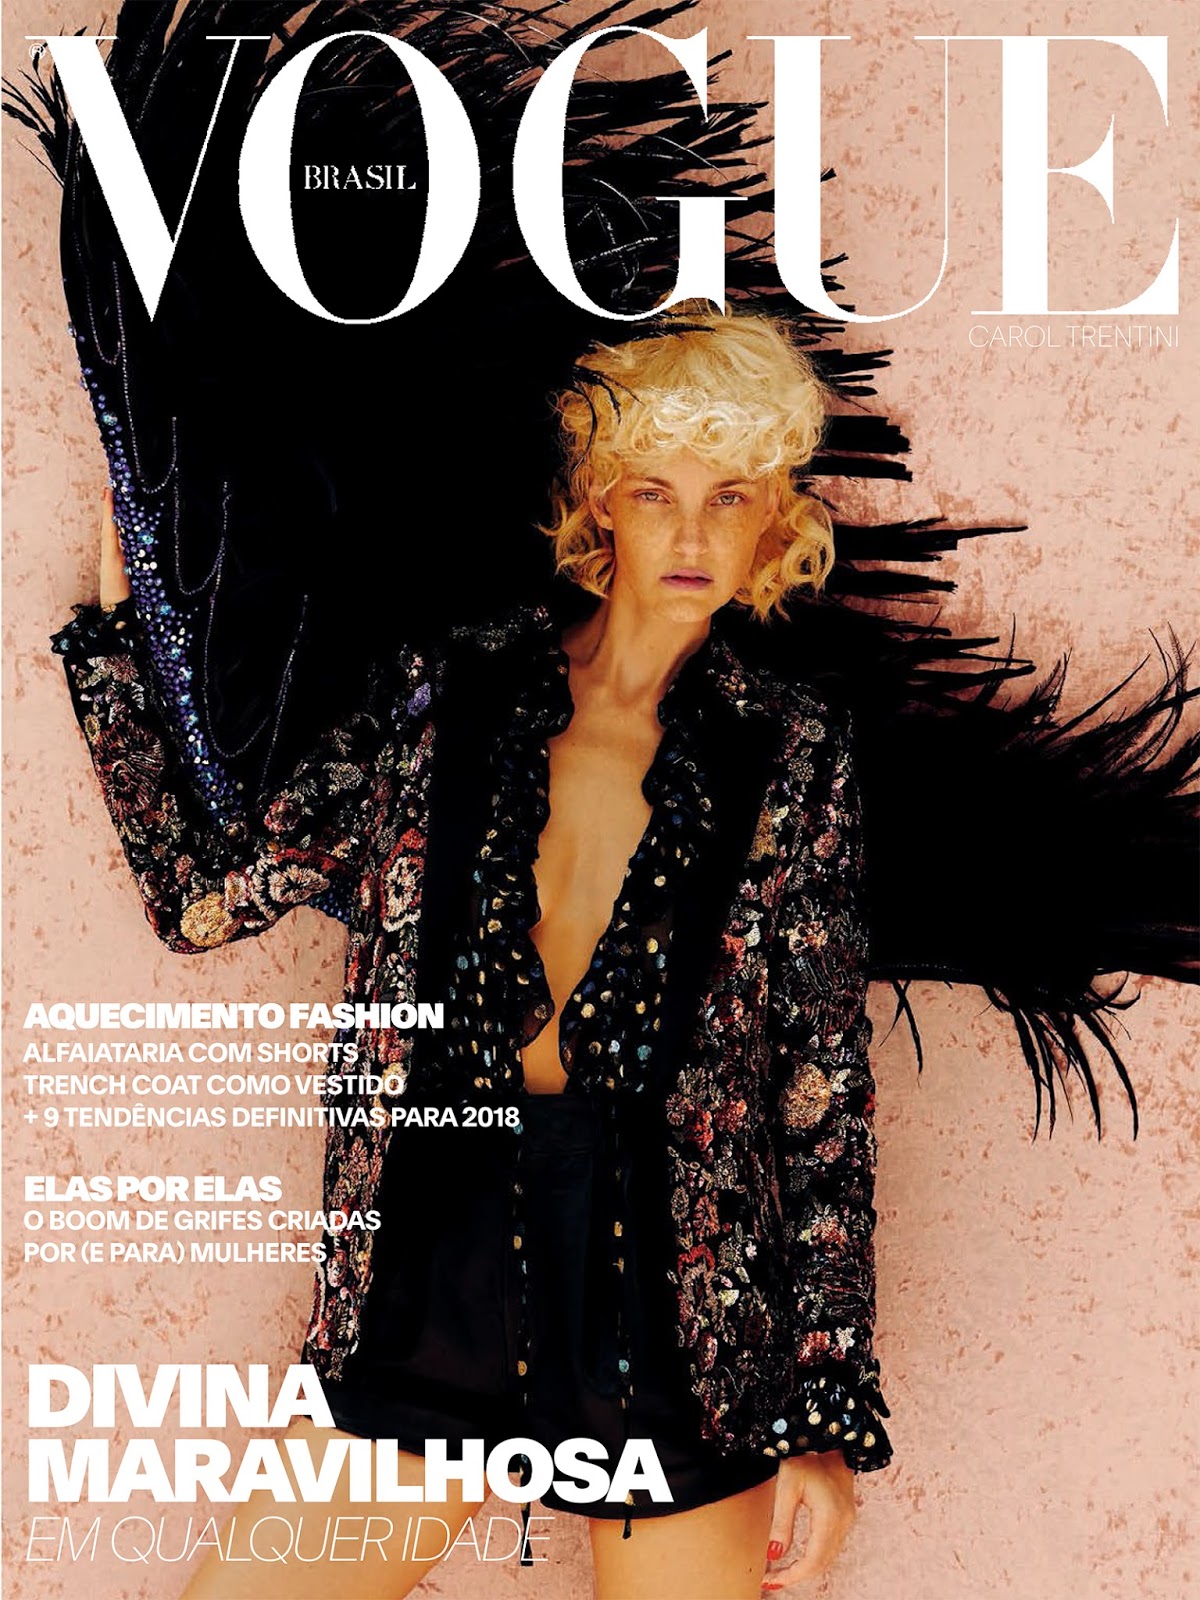 Vogue Brazil February 2018 5.jpg